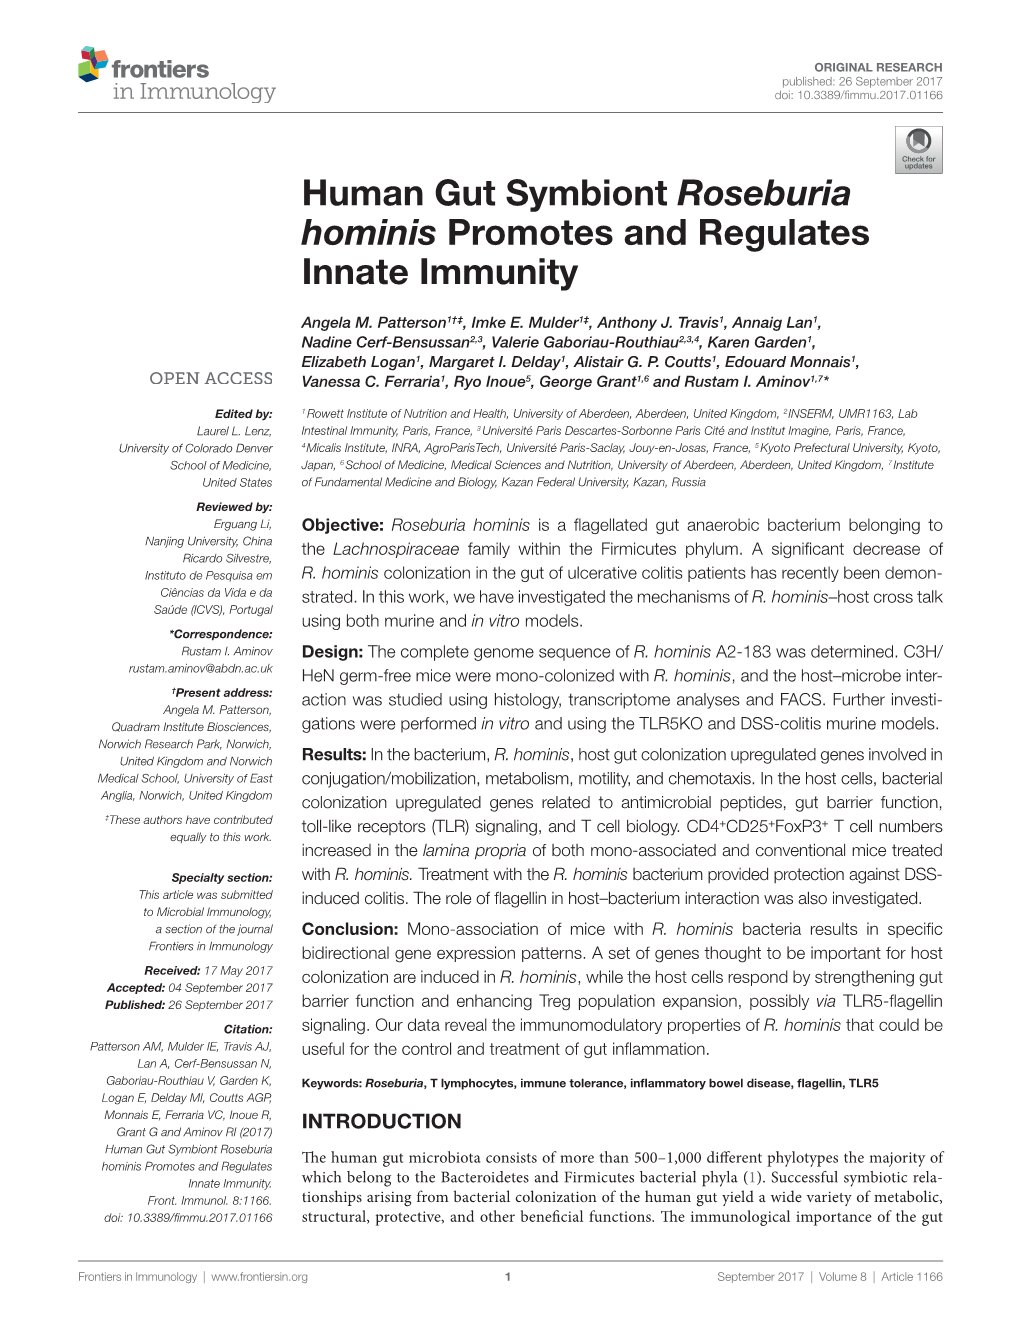 Human Gut Symbiont Roseburia Hominis Promotes and Regulates Innate Immunity